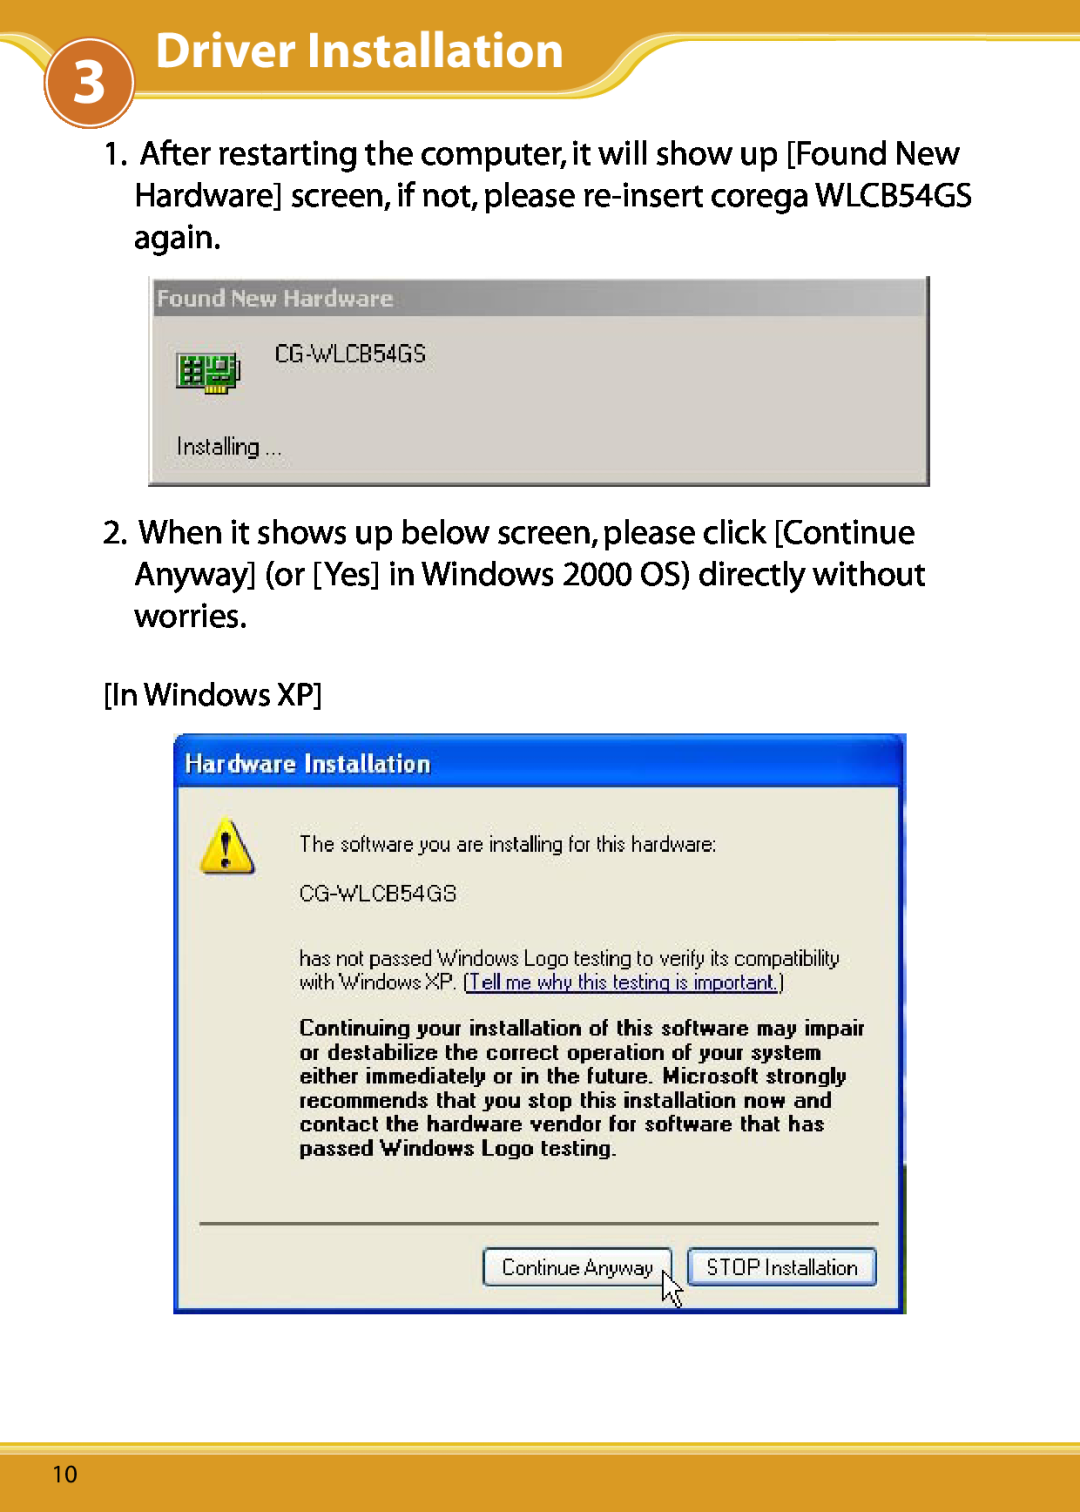 Corega 108M user manual Driver Installation, In Windows XP 